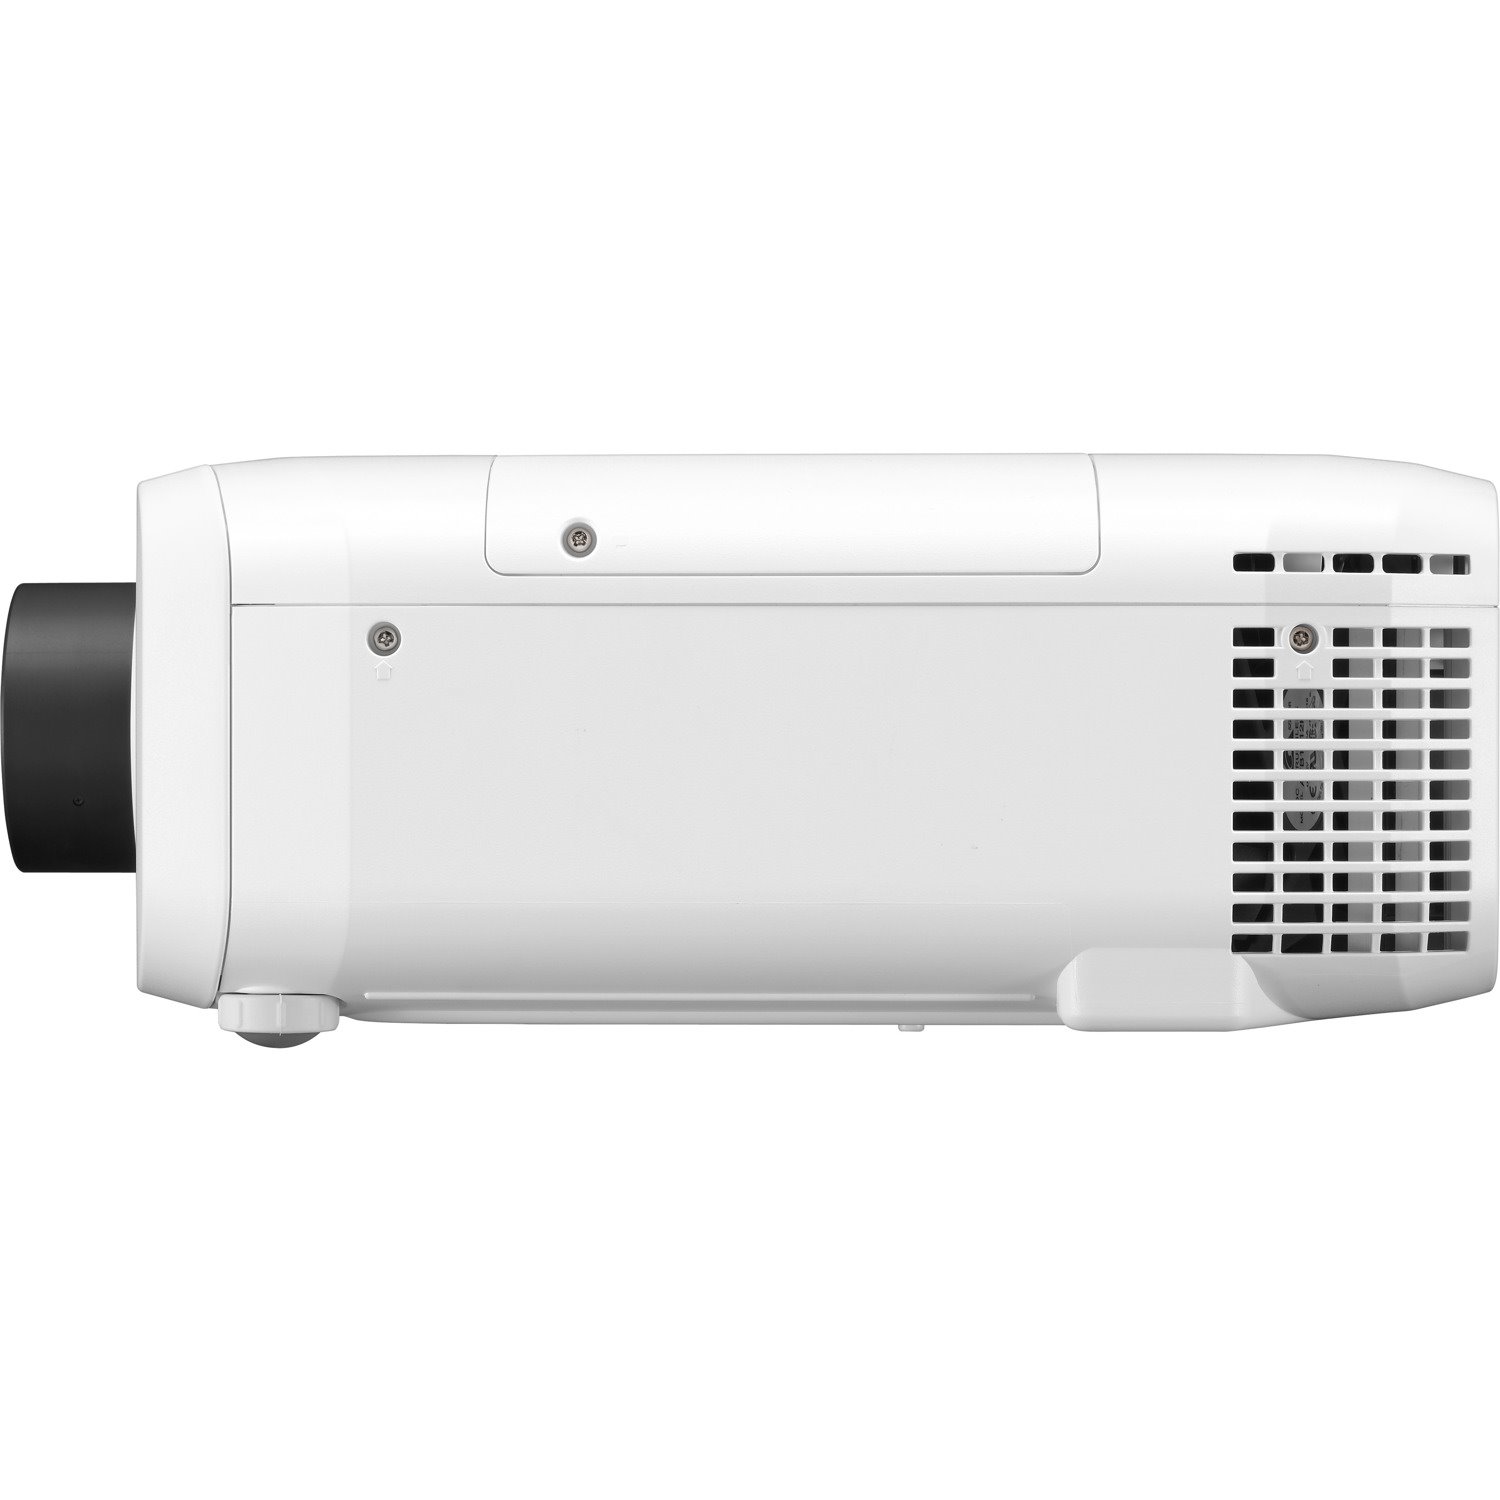 Panasonic PT-EZ590 LCD Projector - 16:10